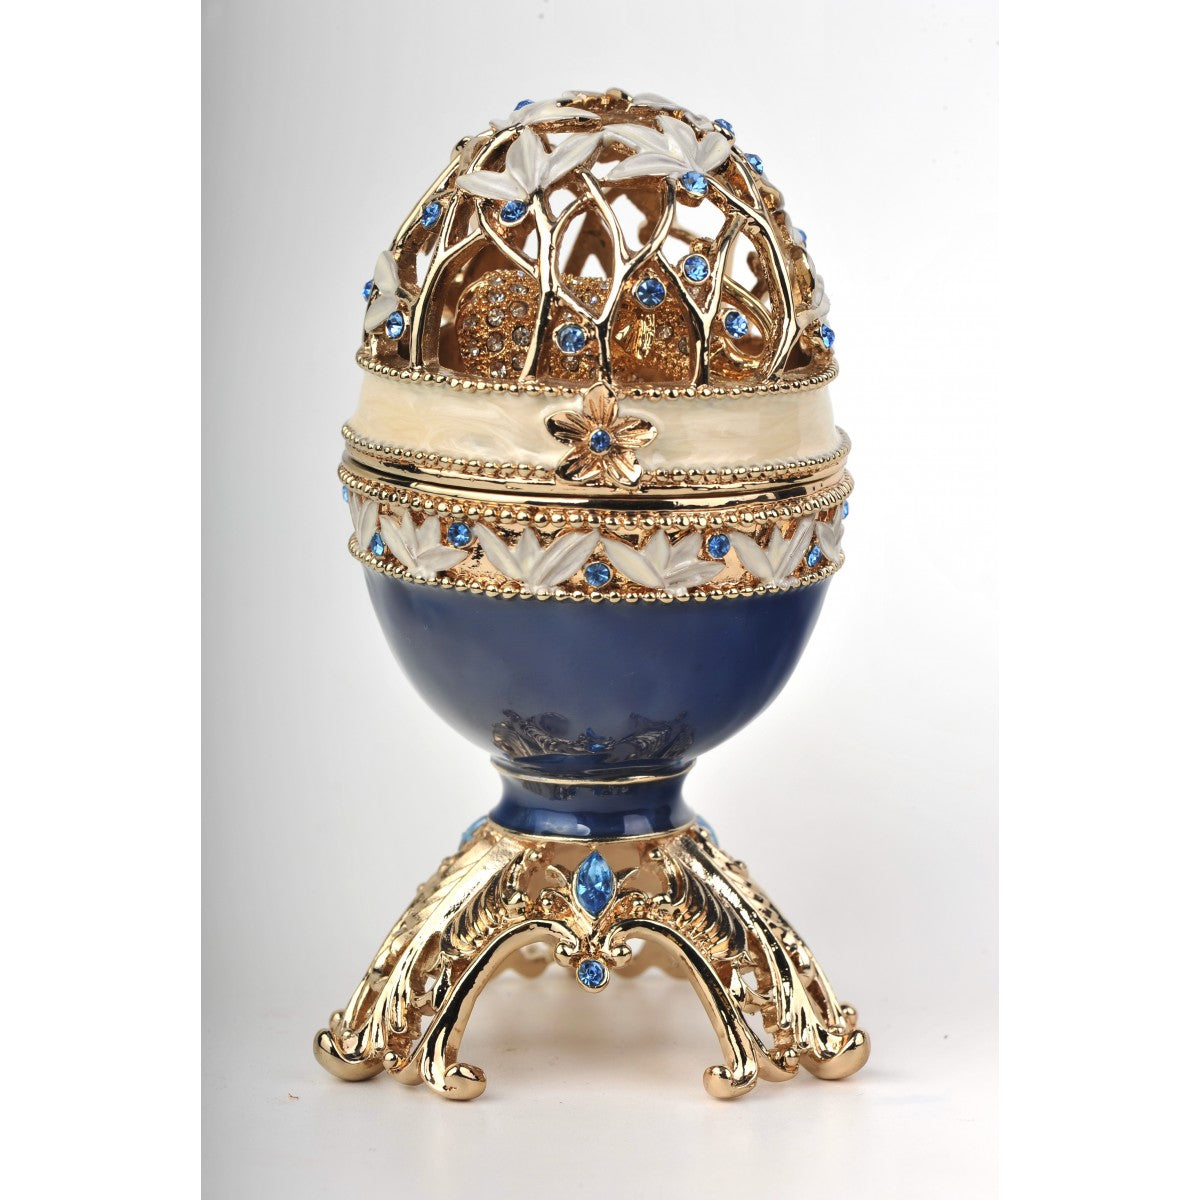 Faberge egg with elephant by Keren Kopal